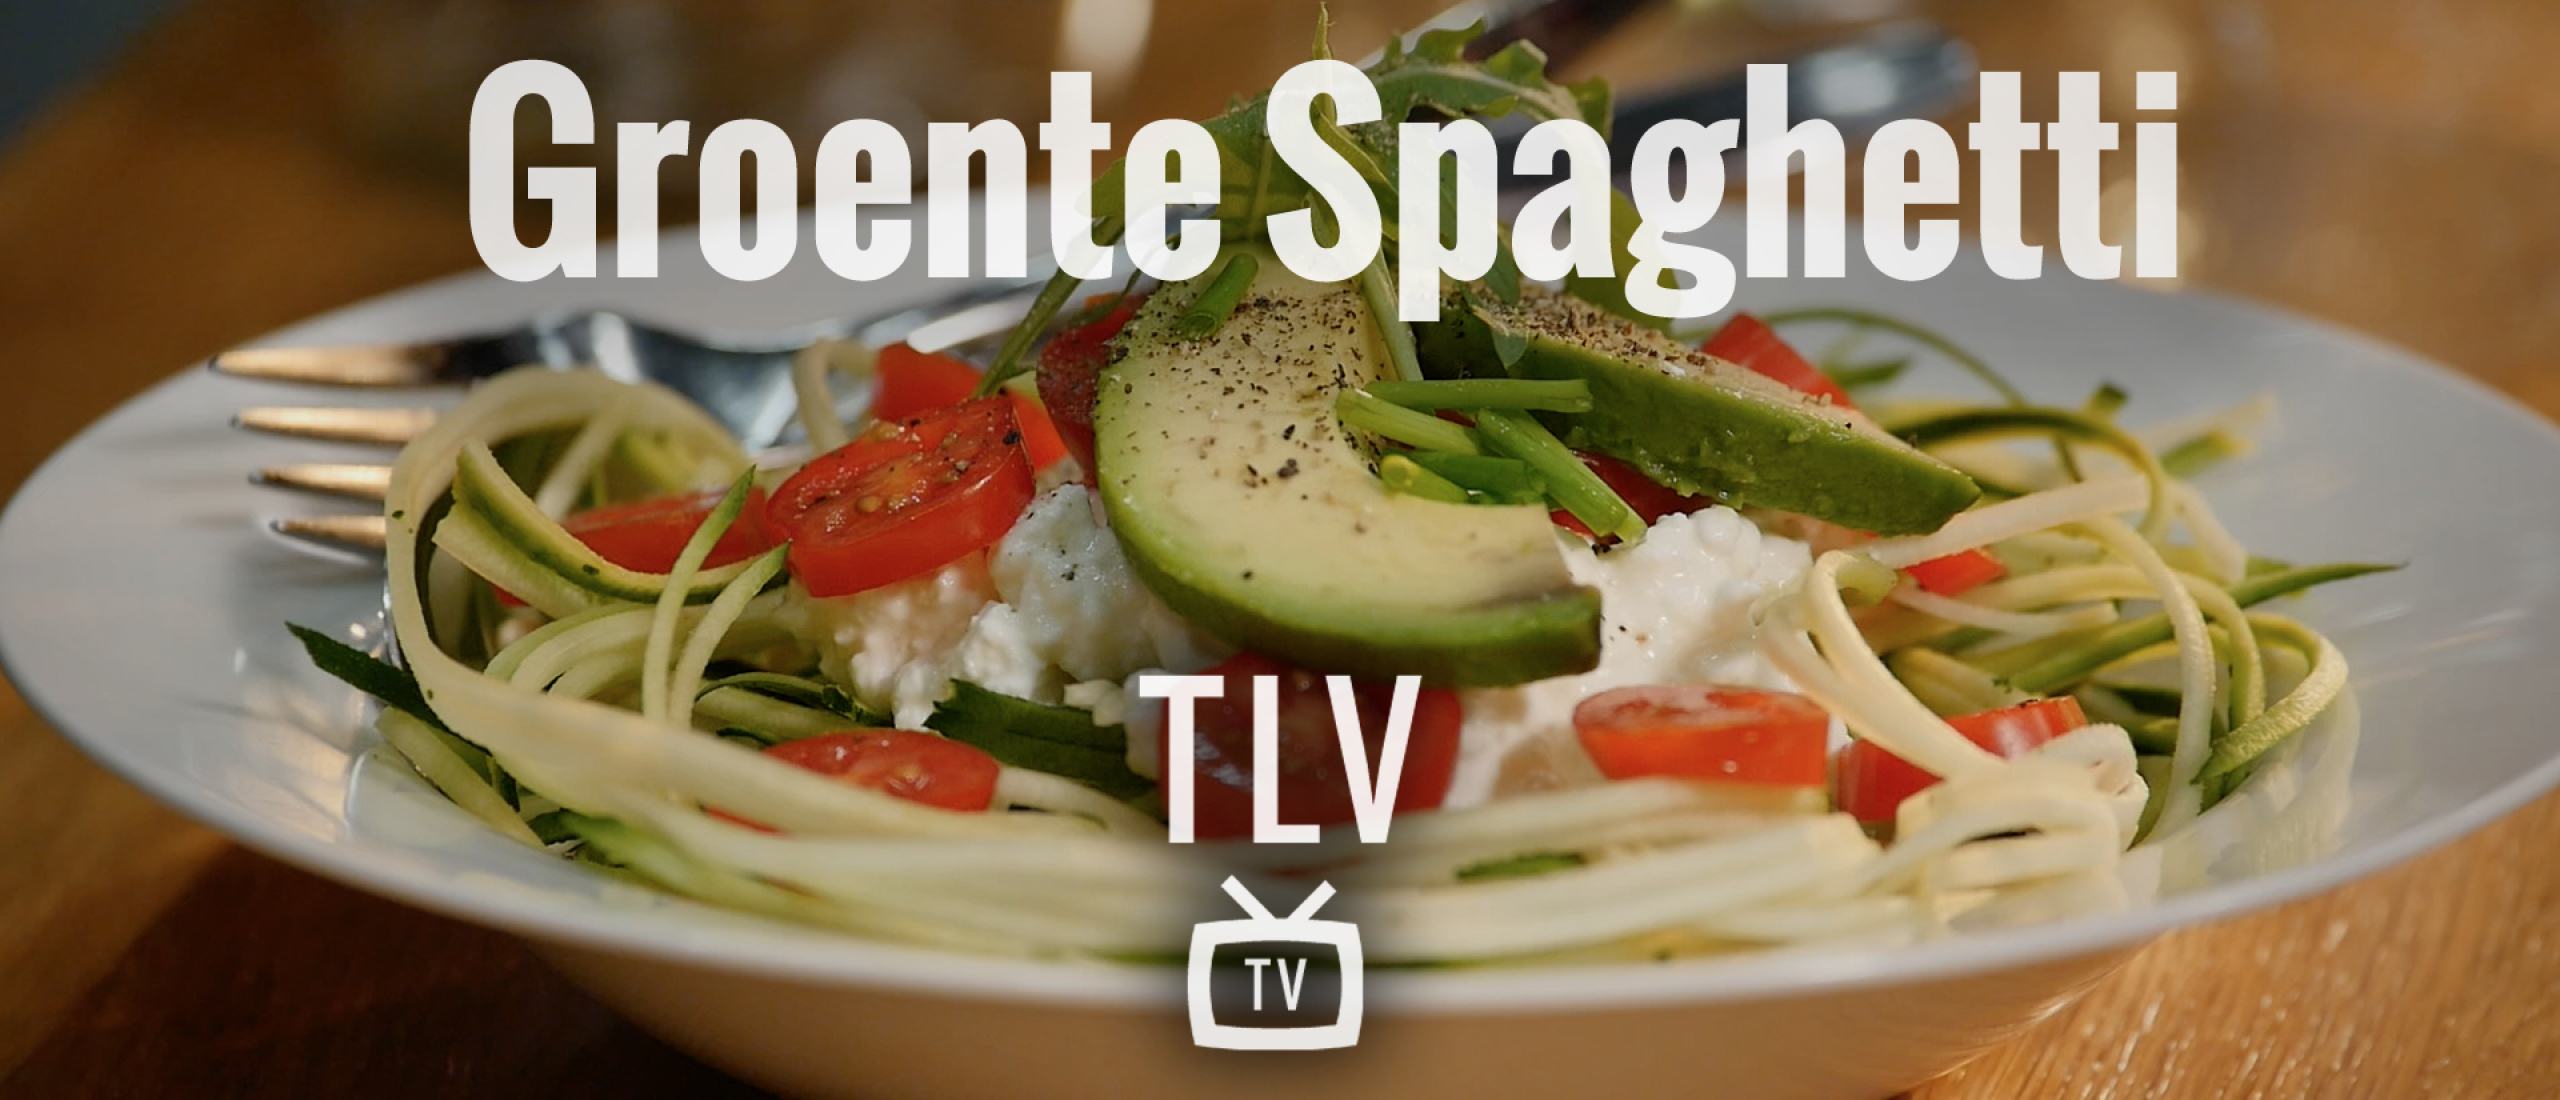 Recept voor groente spaghetti